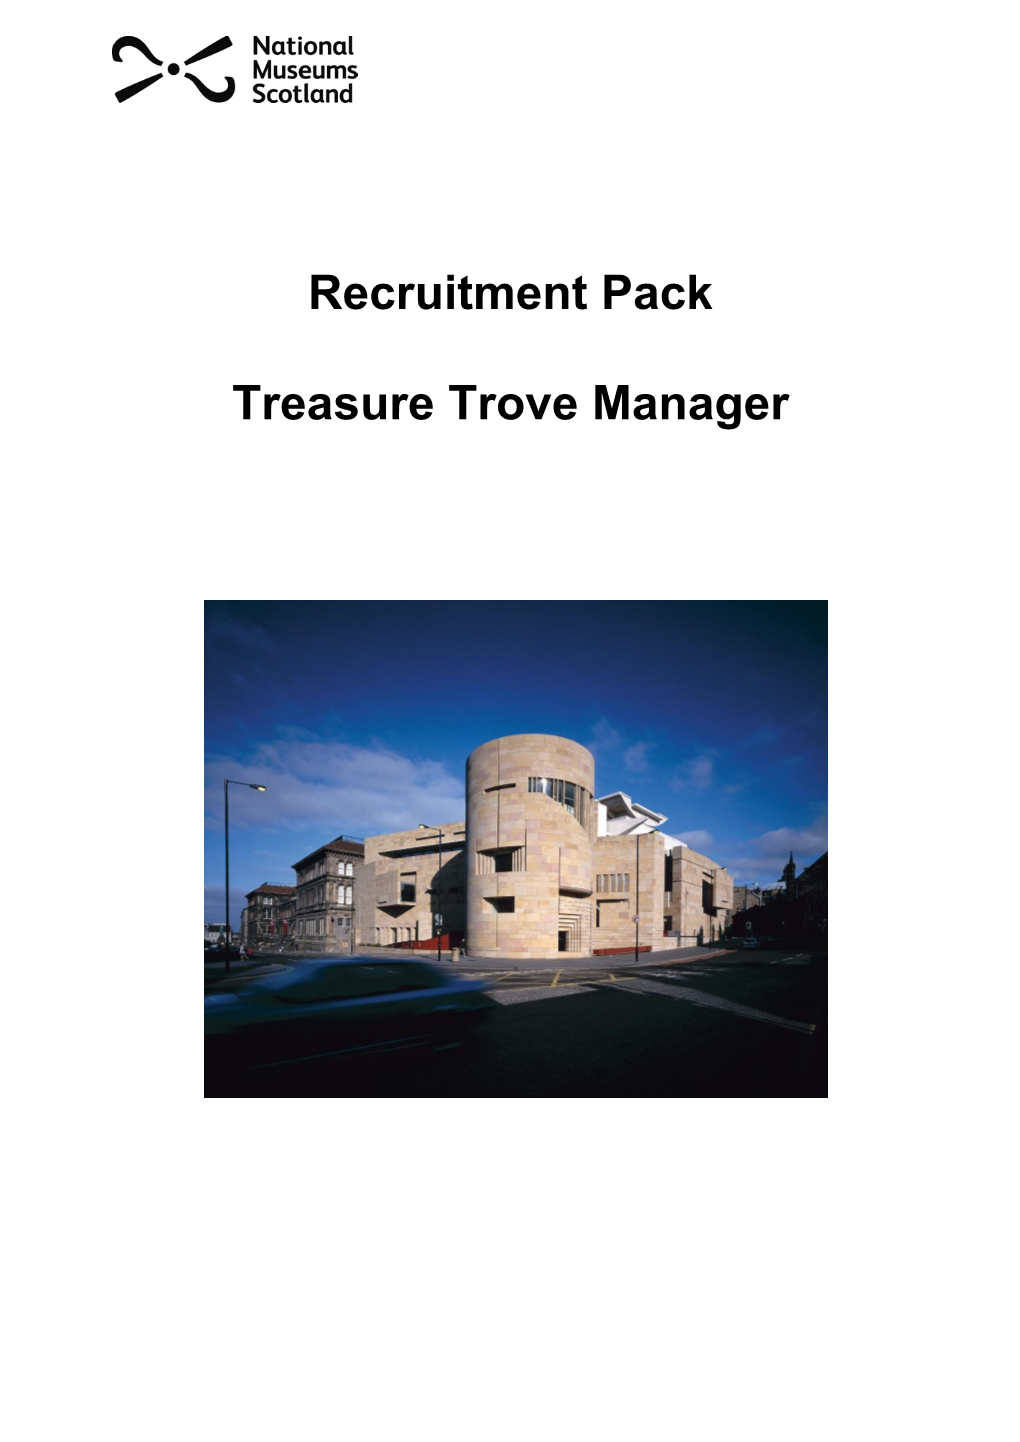 Recruitment Pack Treasure Trove Manager